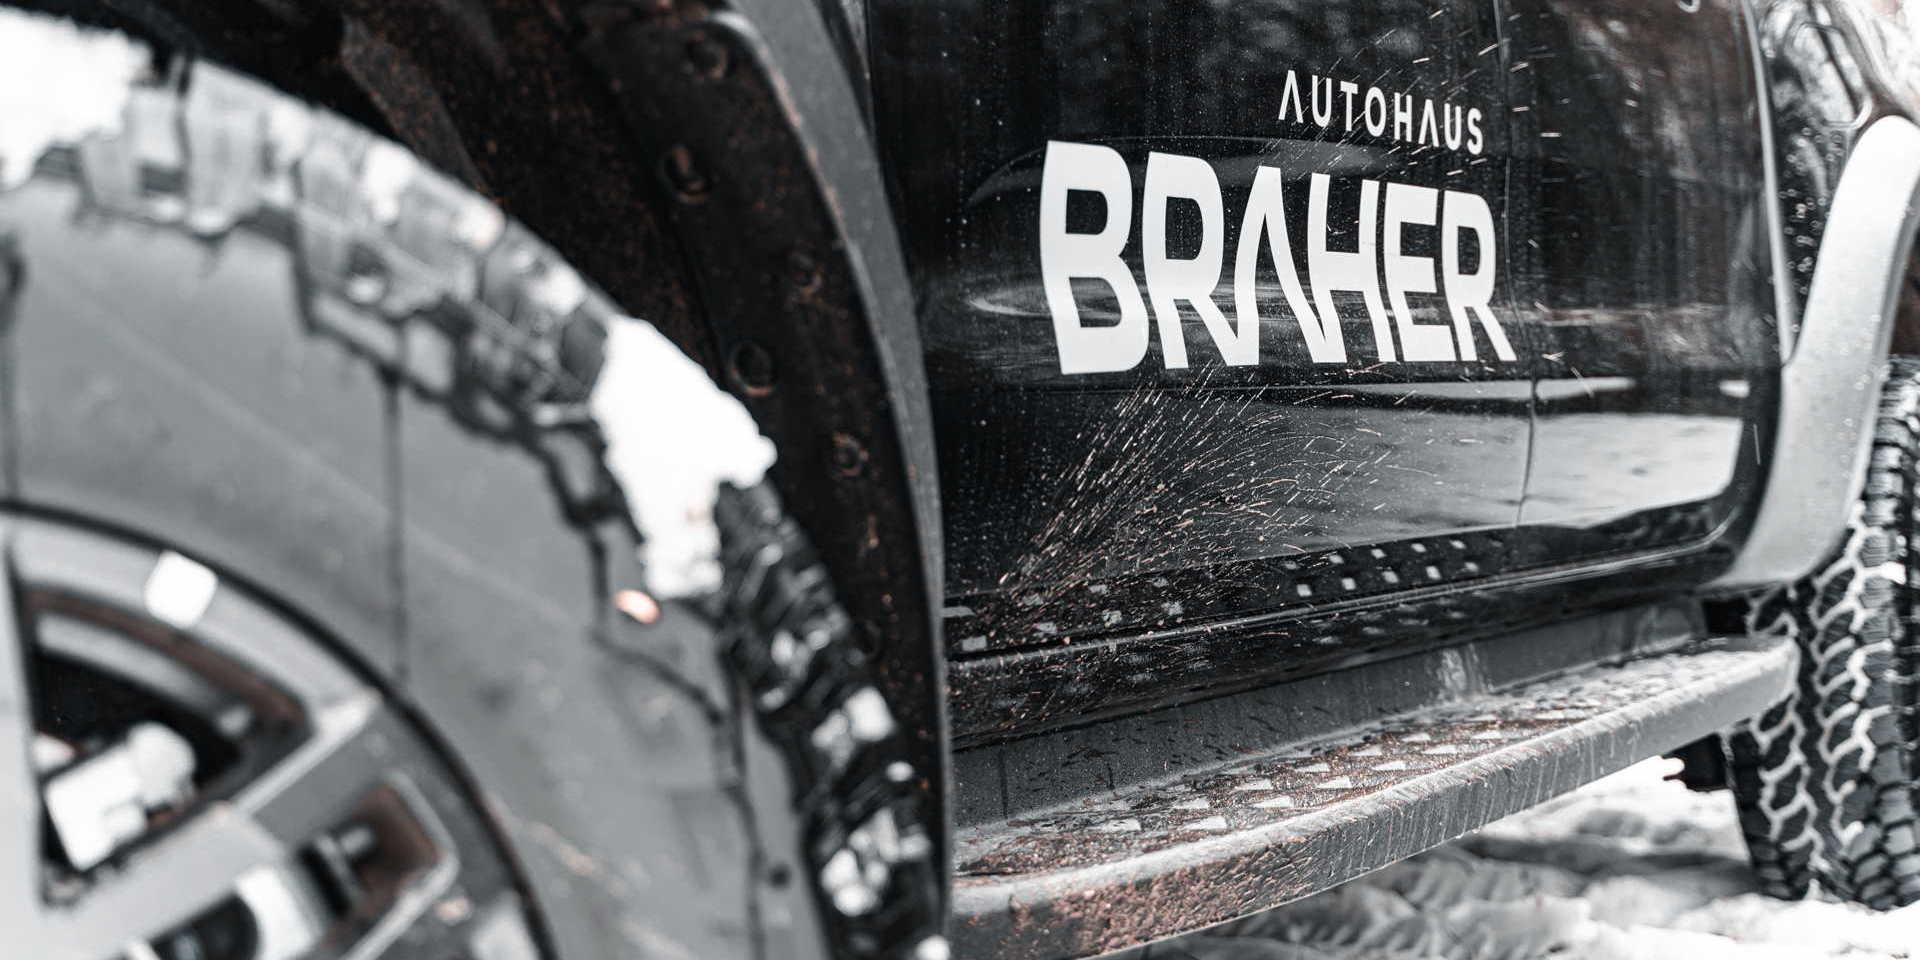 Autohaus Braher Ford Raptor